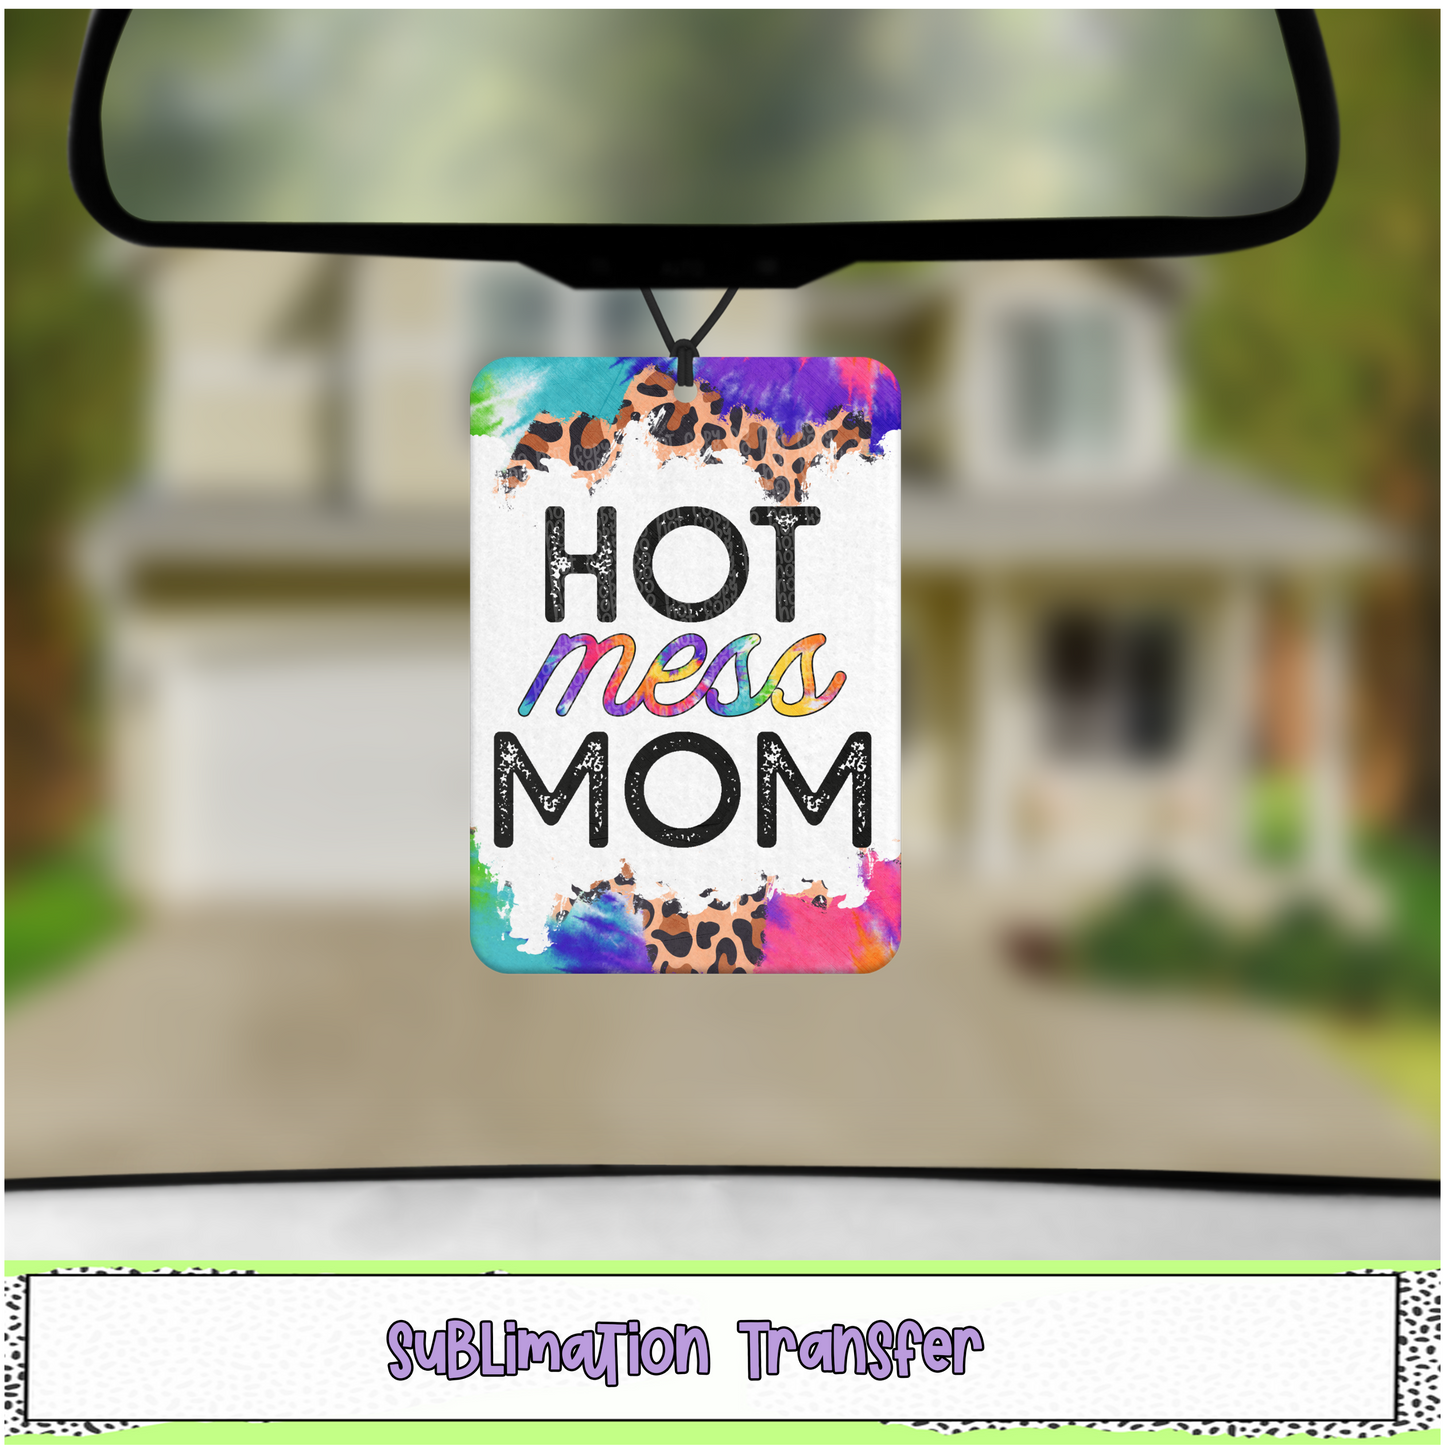 Hot Mess Mom - Air Freshener Sublimation Transfer - RTS